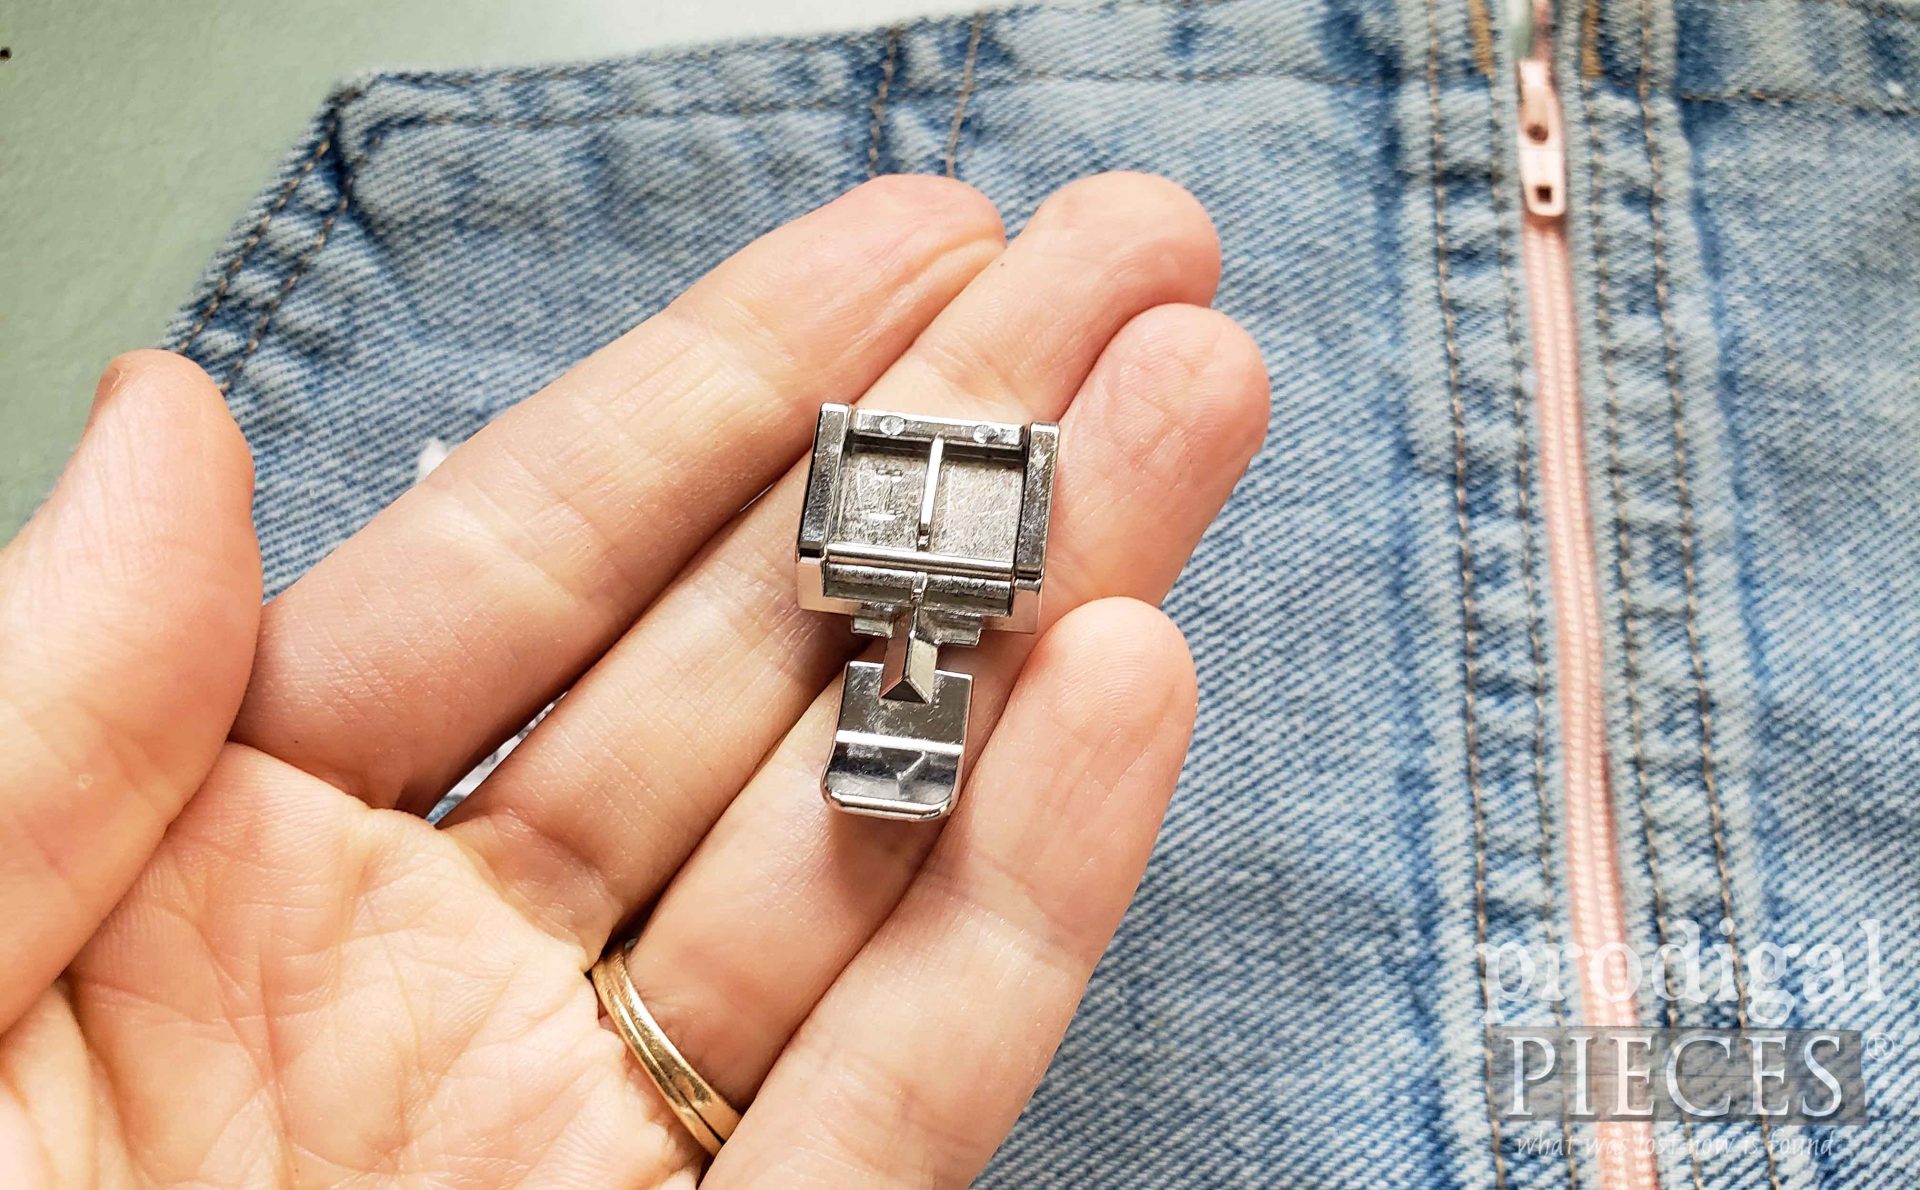 Zipper Foot for Sewing Machine | prodigalpieces.com